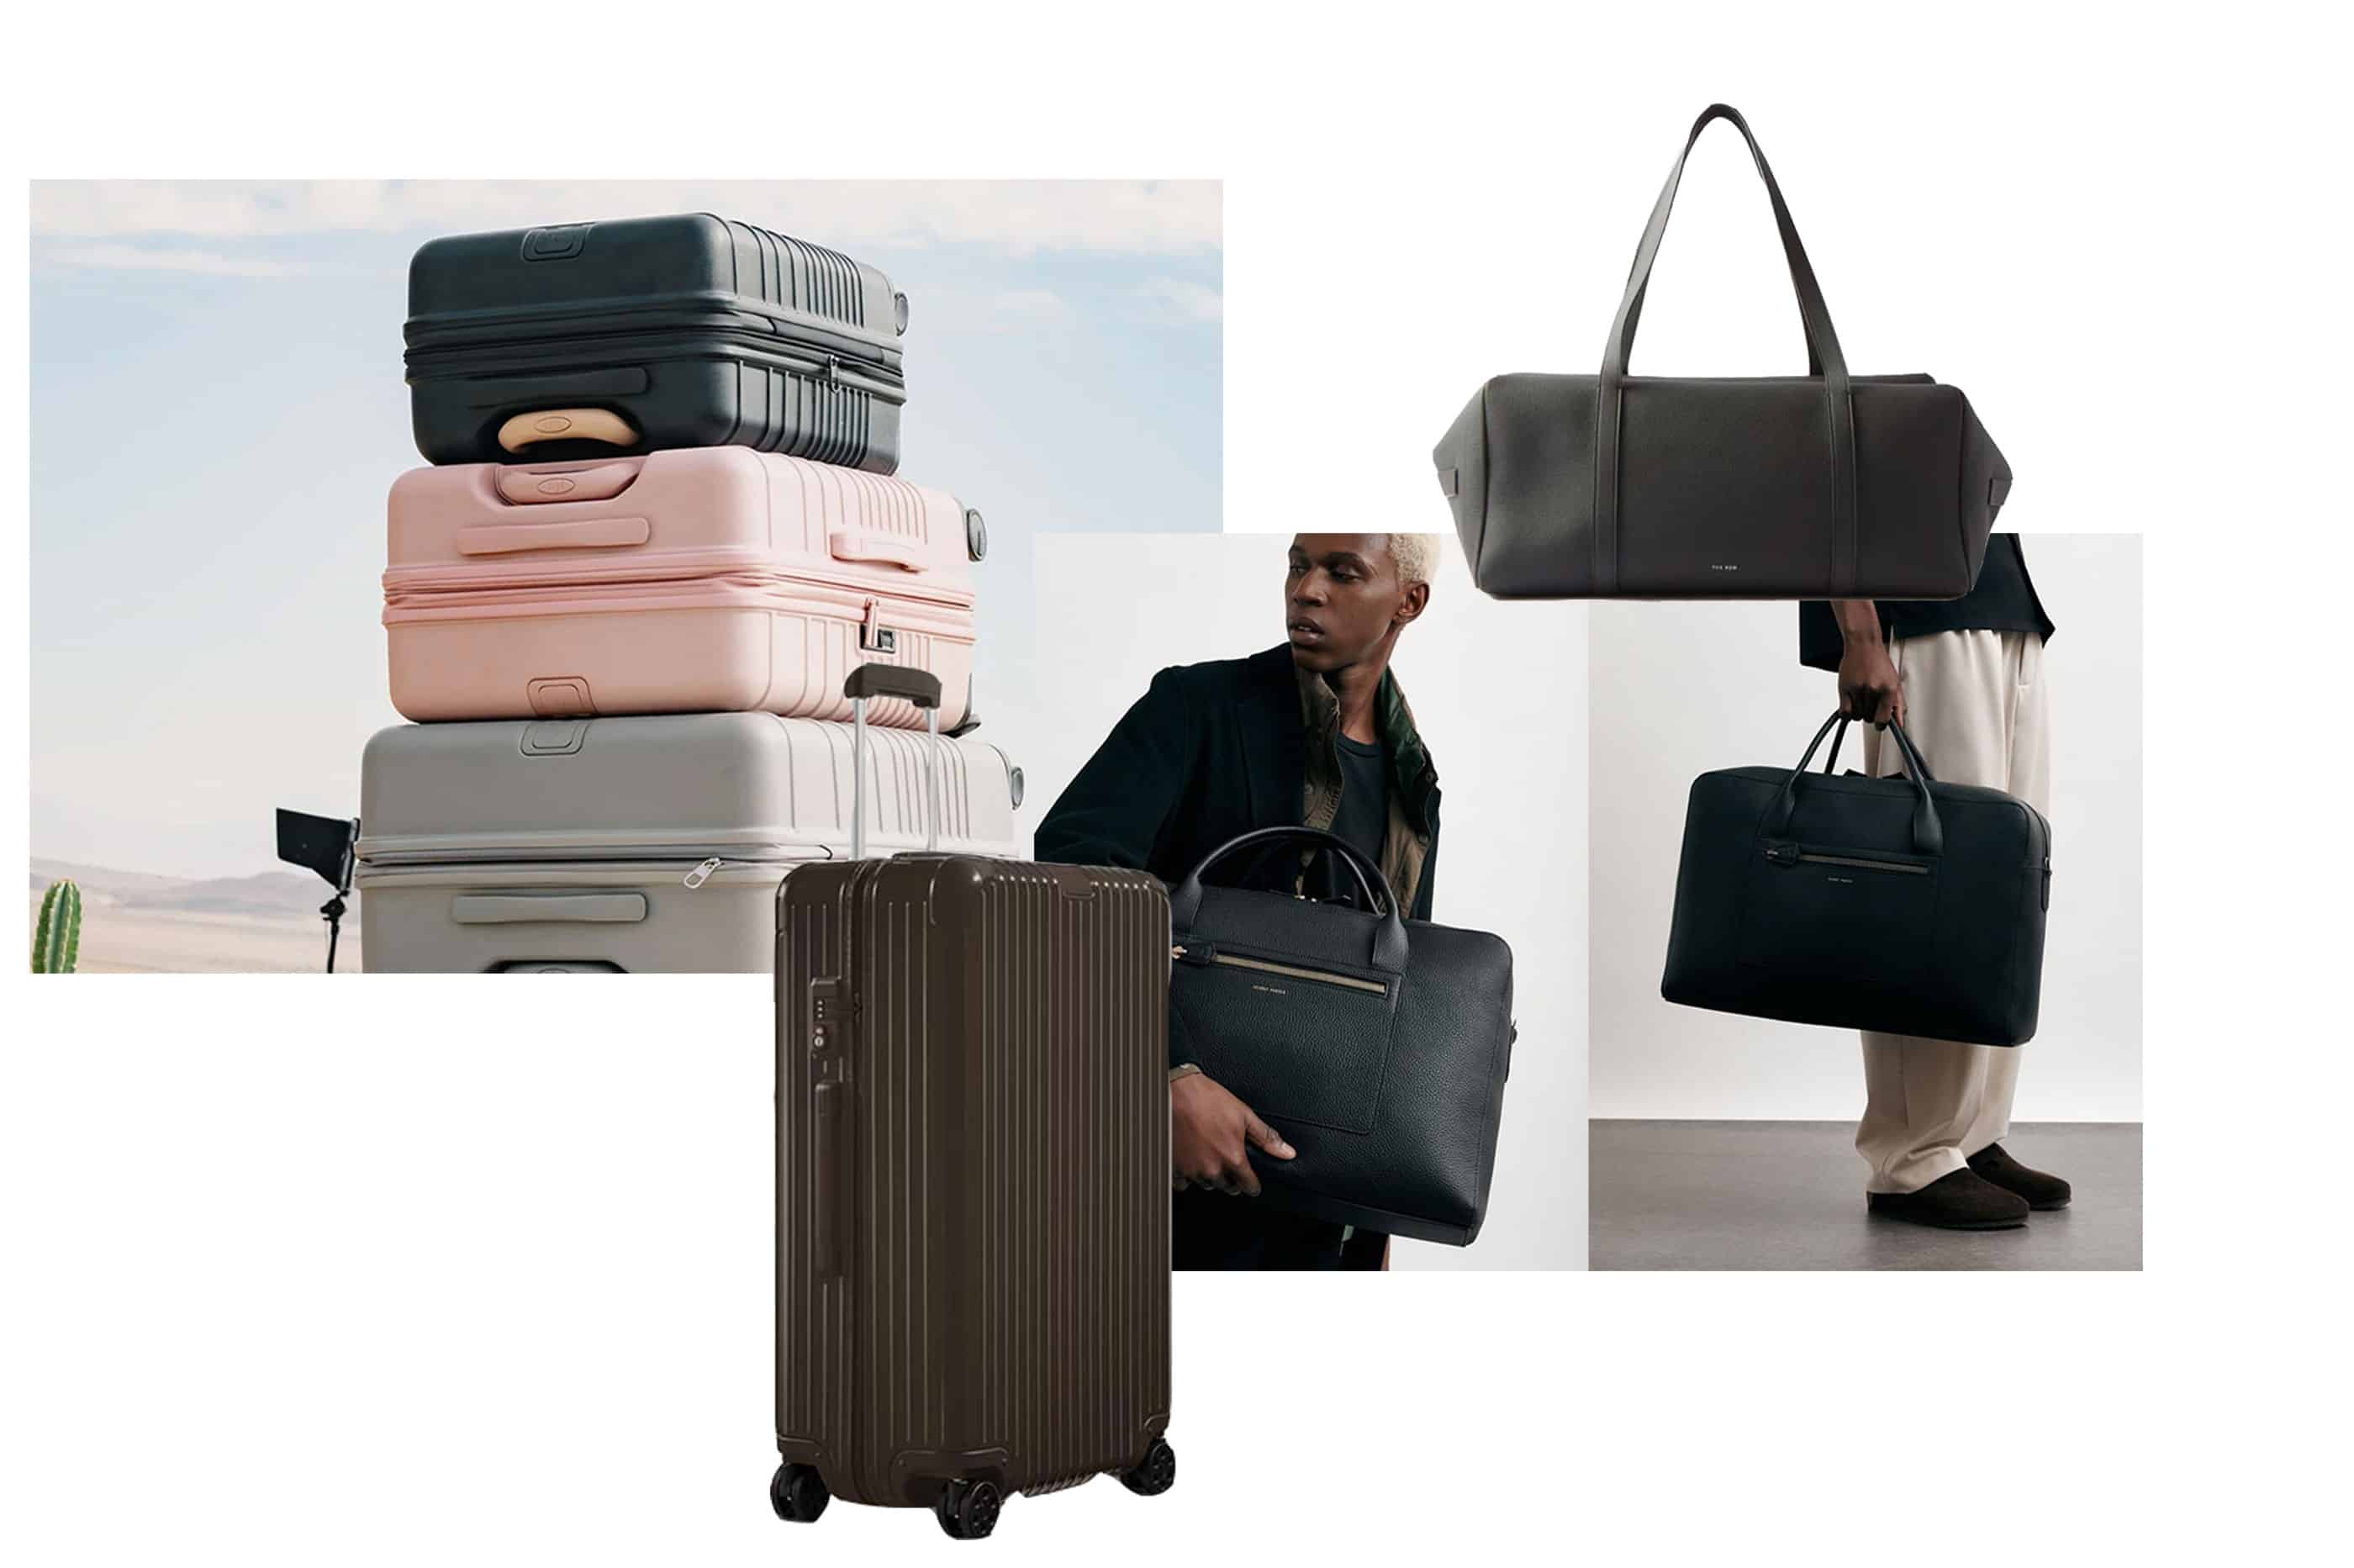 SteamLine Luggage  Luxury luggage, Luggage brands, Luggage